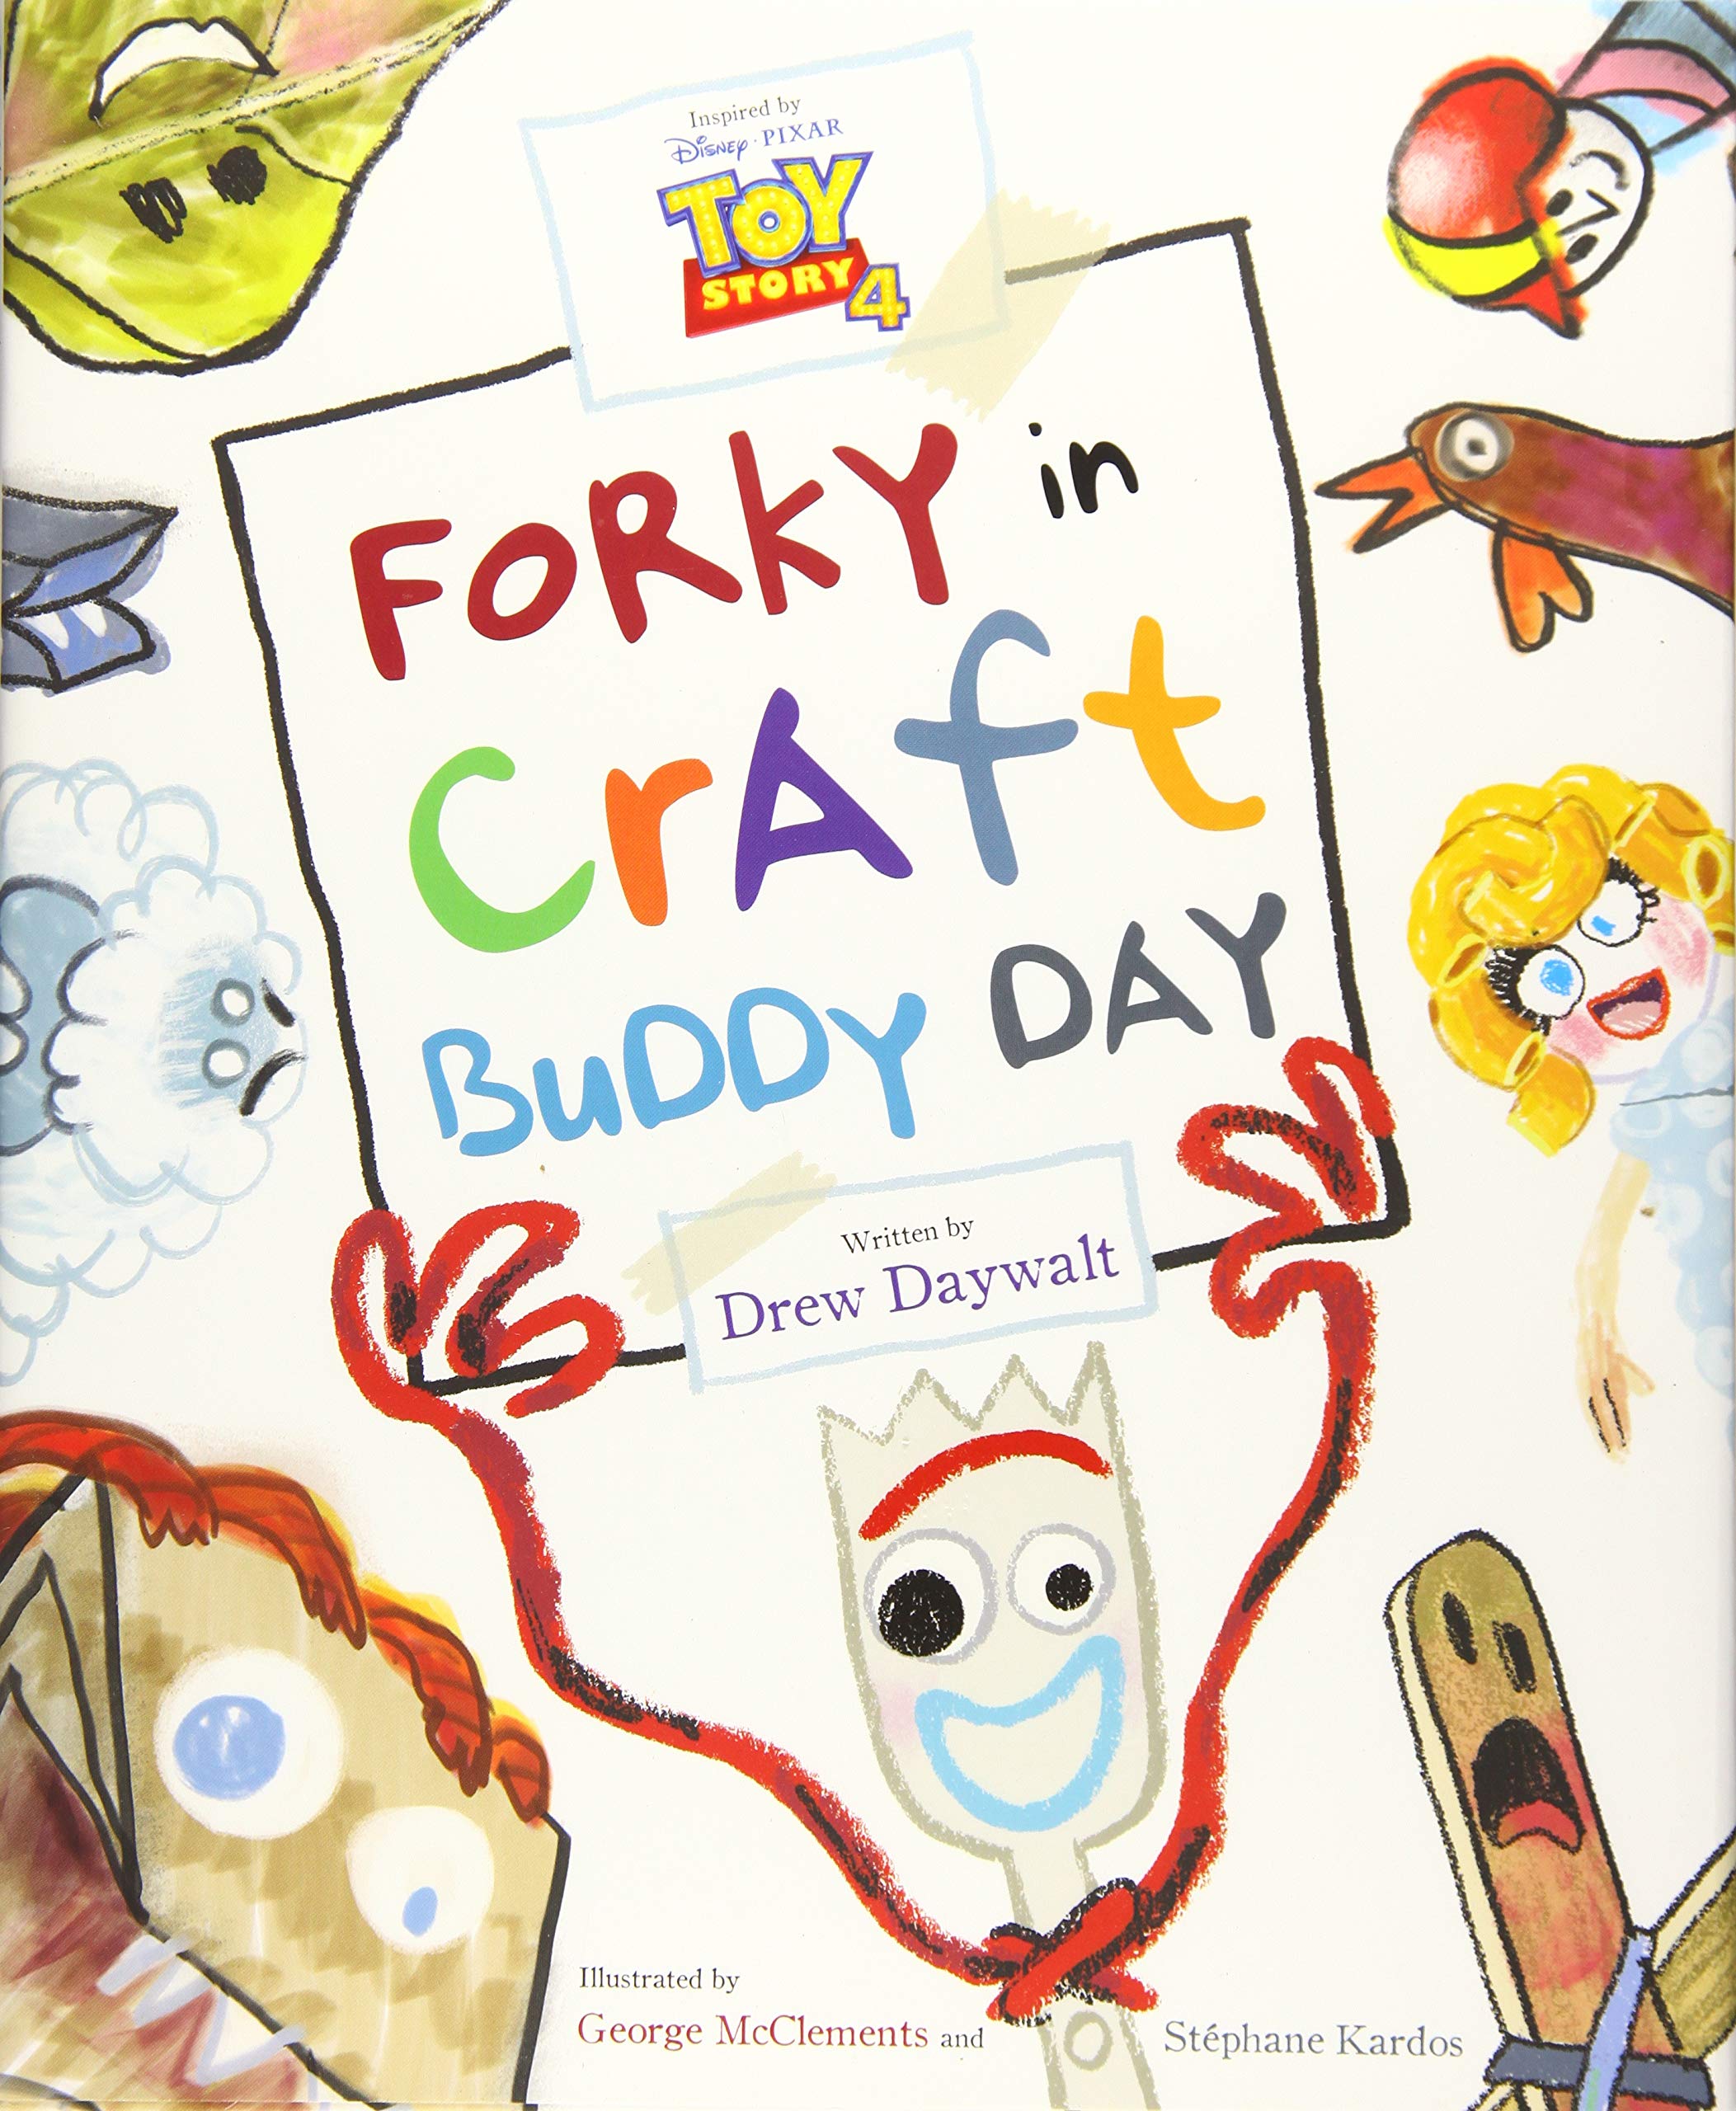 Toy Story 4: Forky in Craft Buddy Day | Drew Daywalt